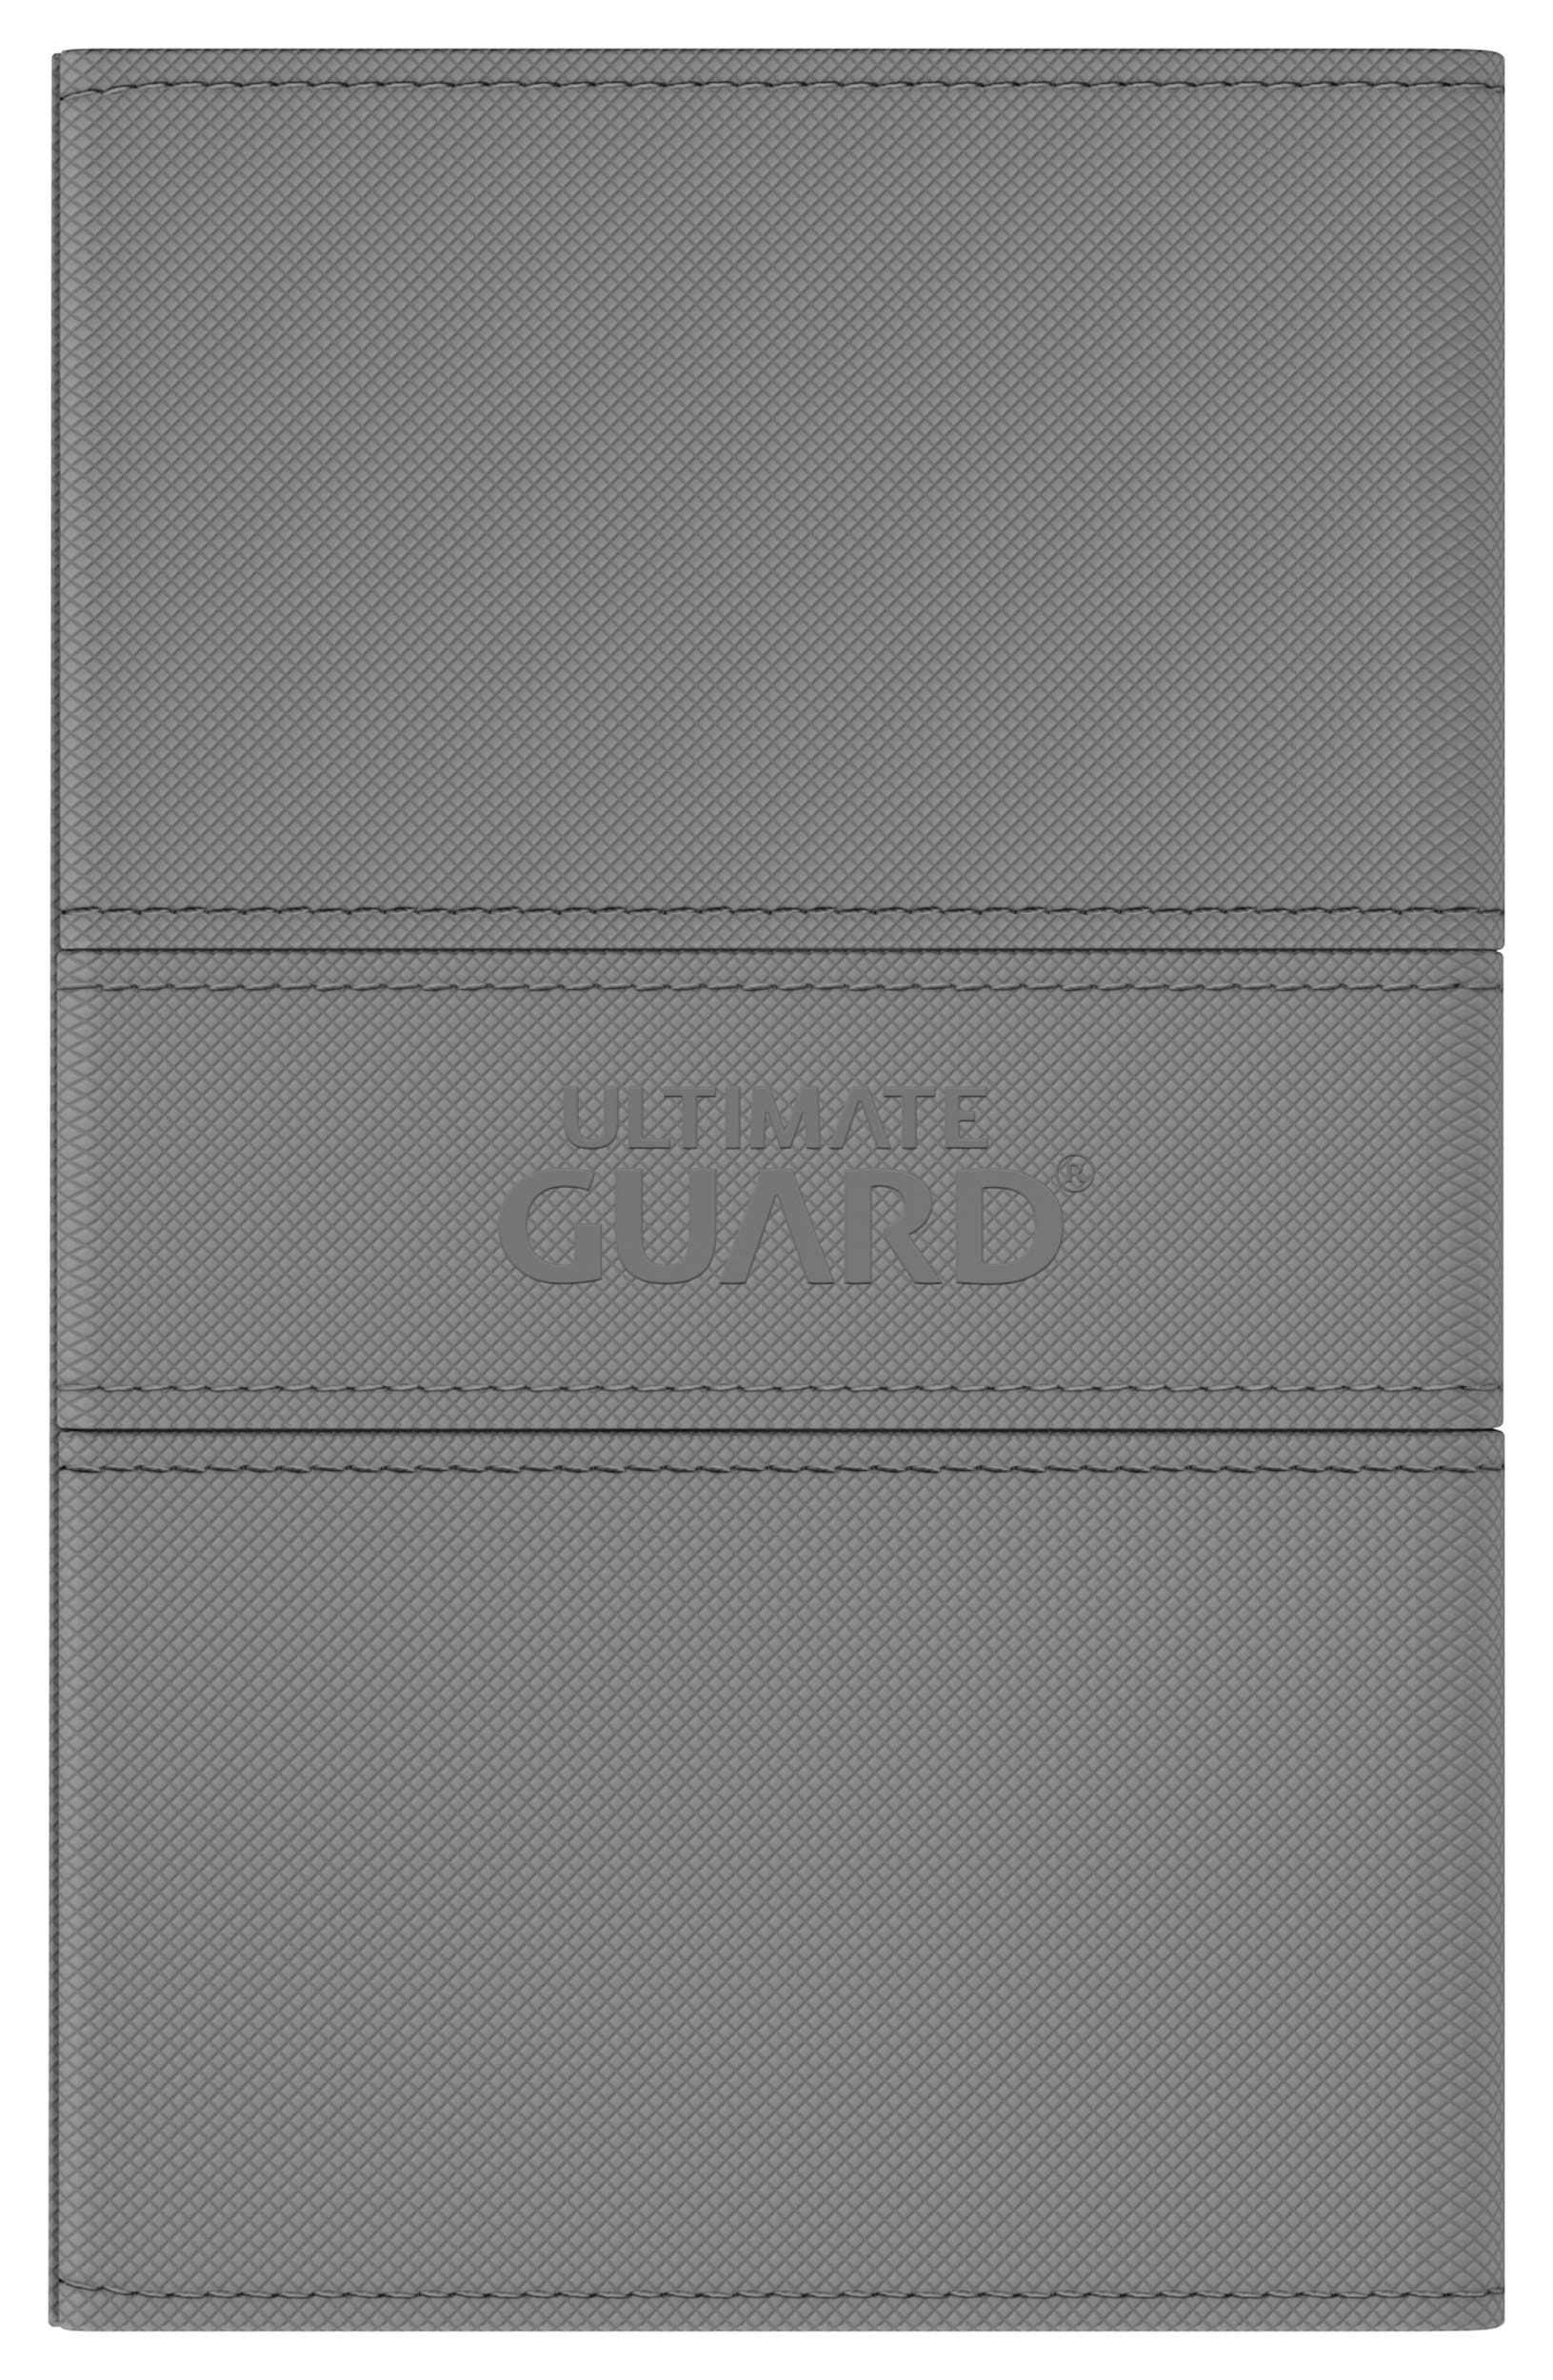 Flip´n´Tray Deckbox 160+ XenoSkin Ultimate Guard grau